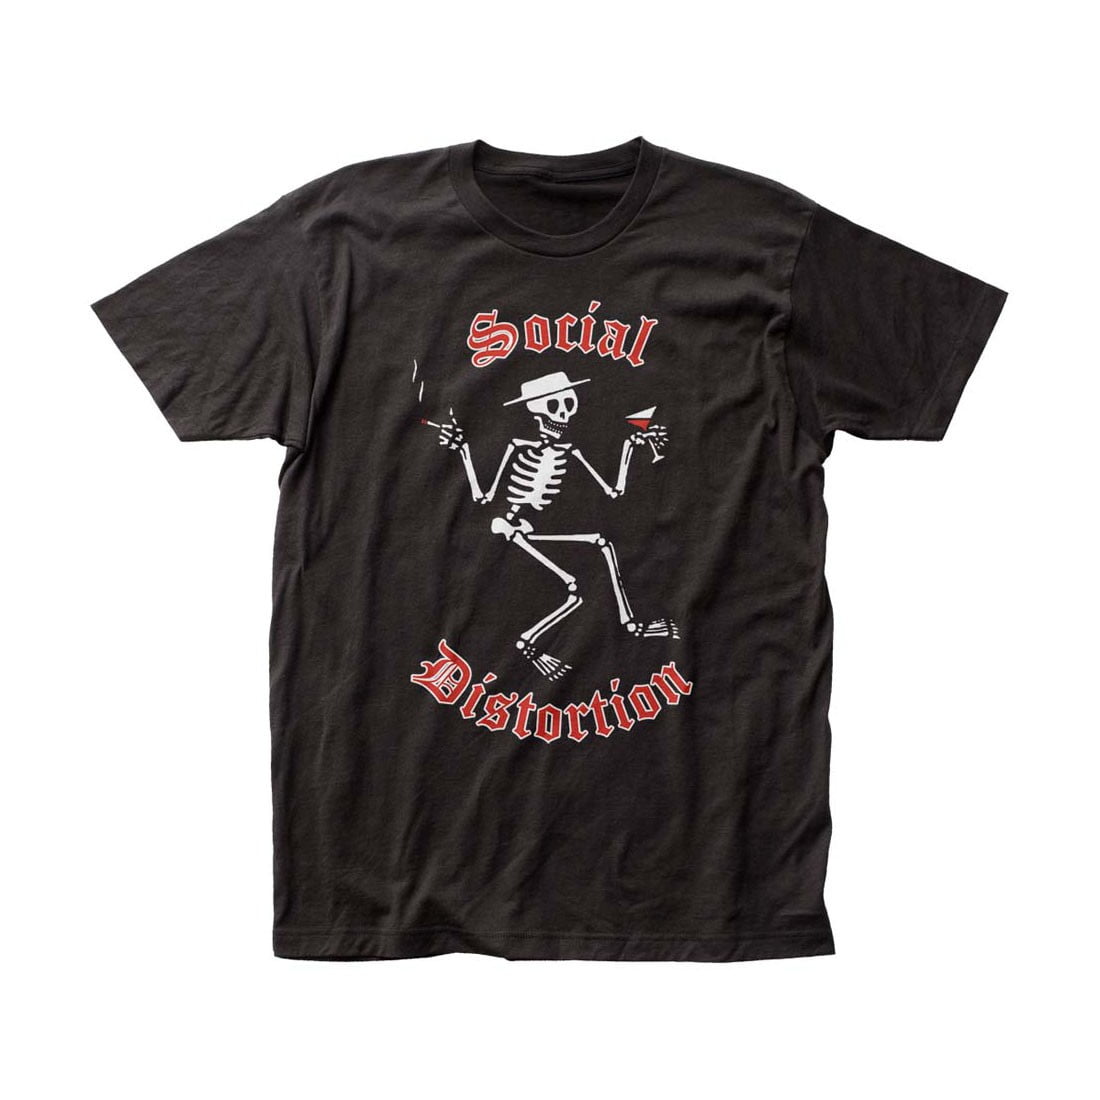 SOCIAL DISTORTION T-shirt Punk Rock Skeleton Logo Adult Mens   Black New 